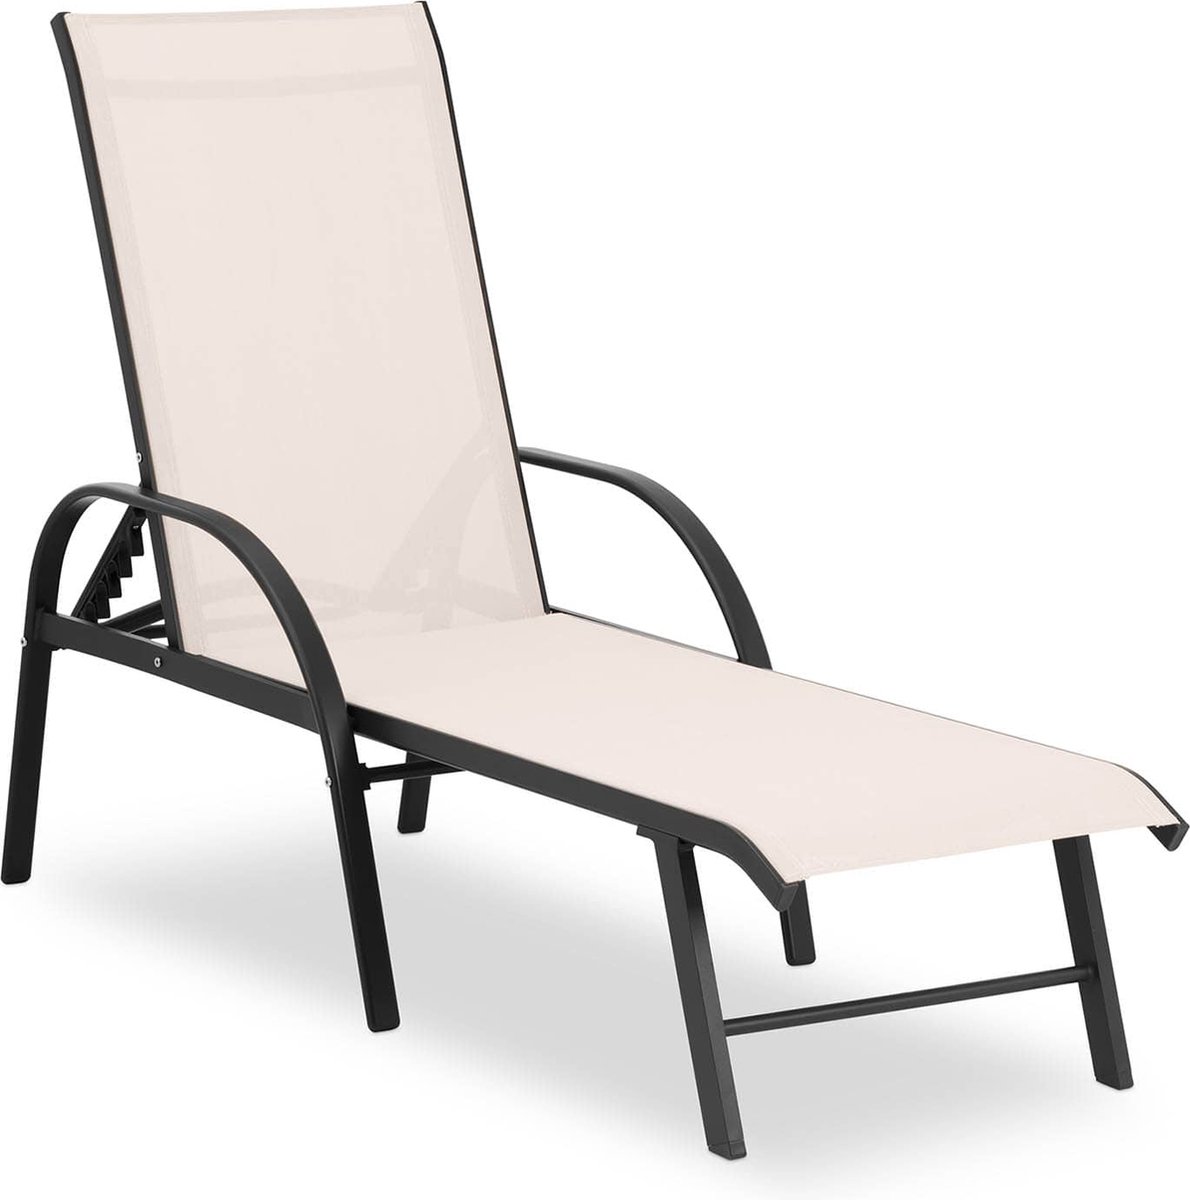 Uniprodo ligstoel - beige - aluminium frame - verstelbare rugleuning